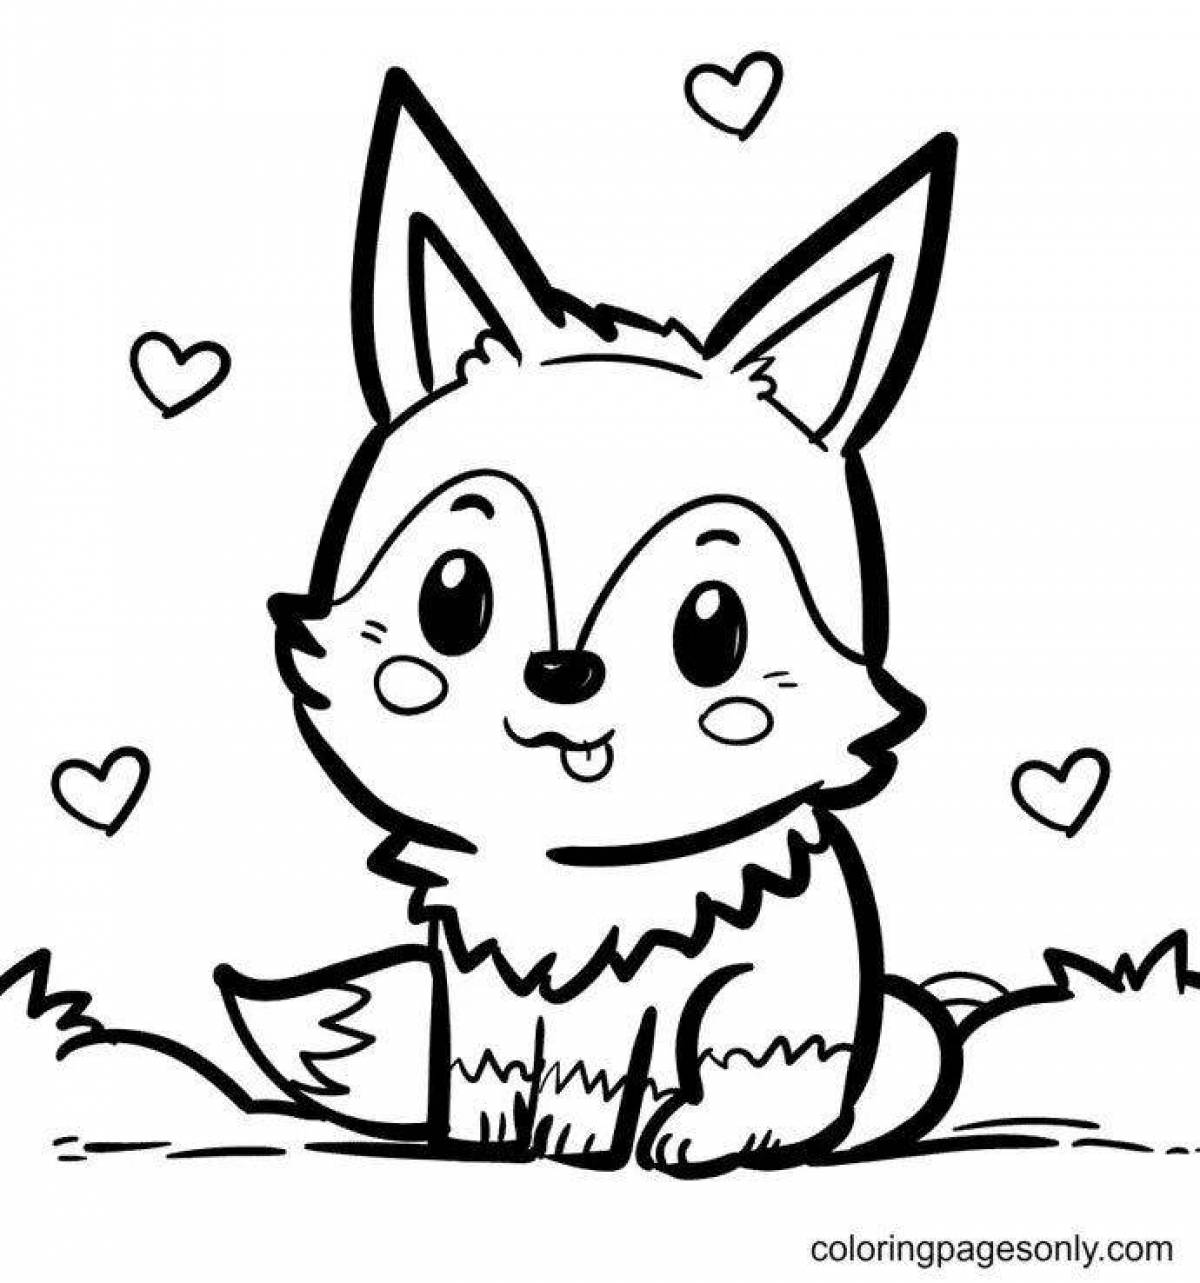 Shy fox coloring